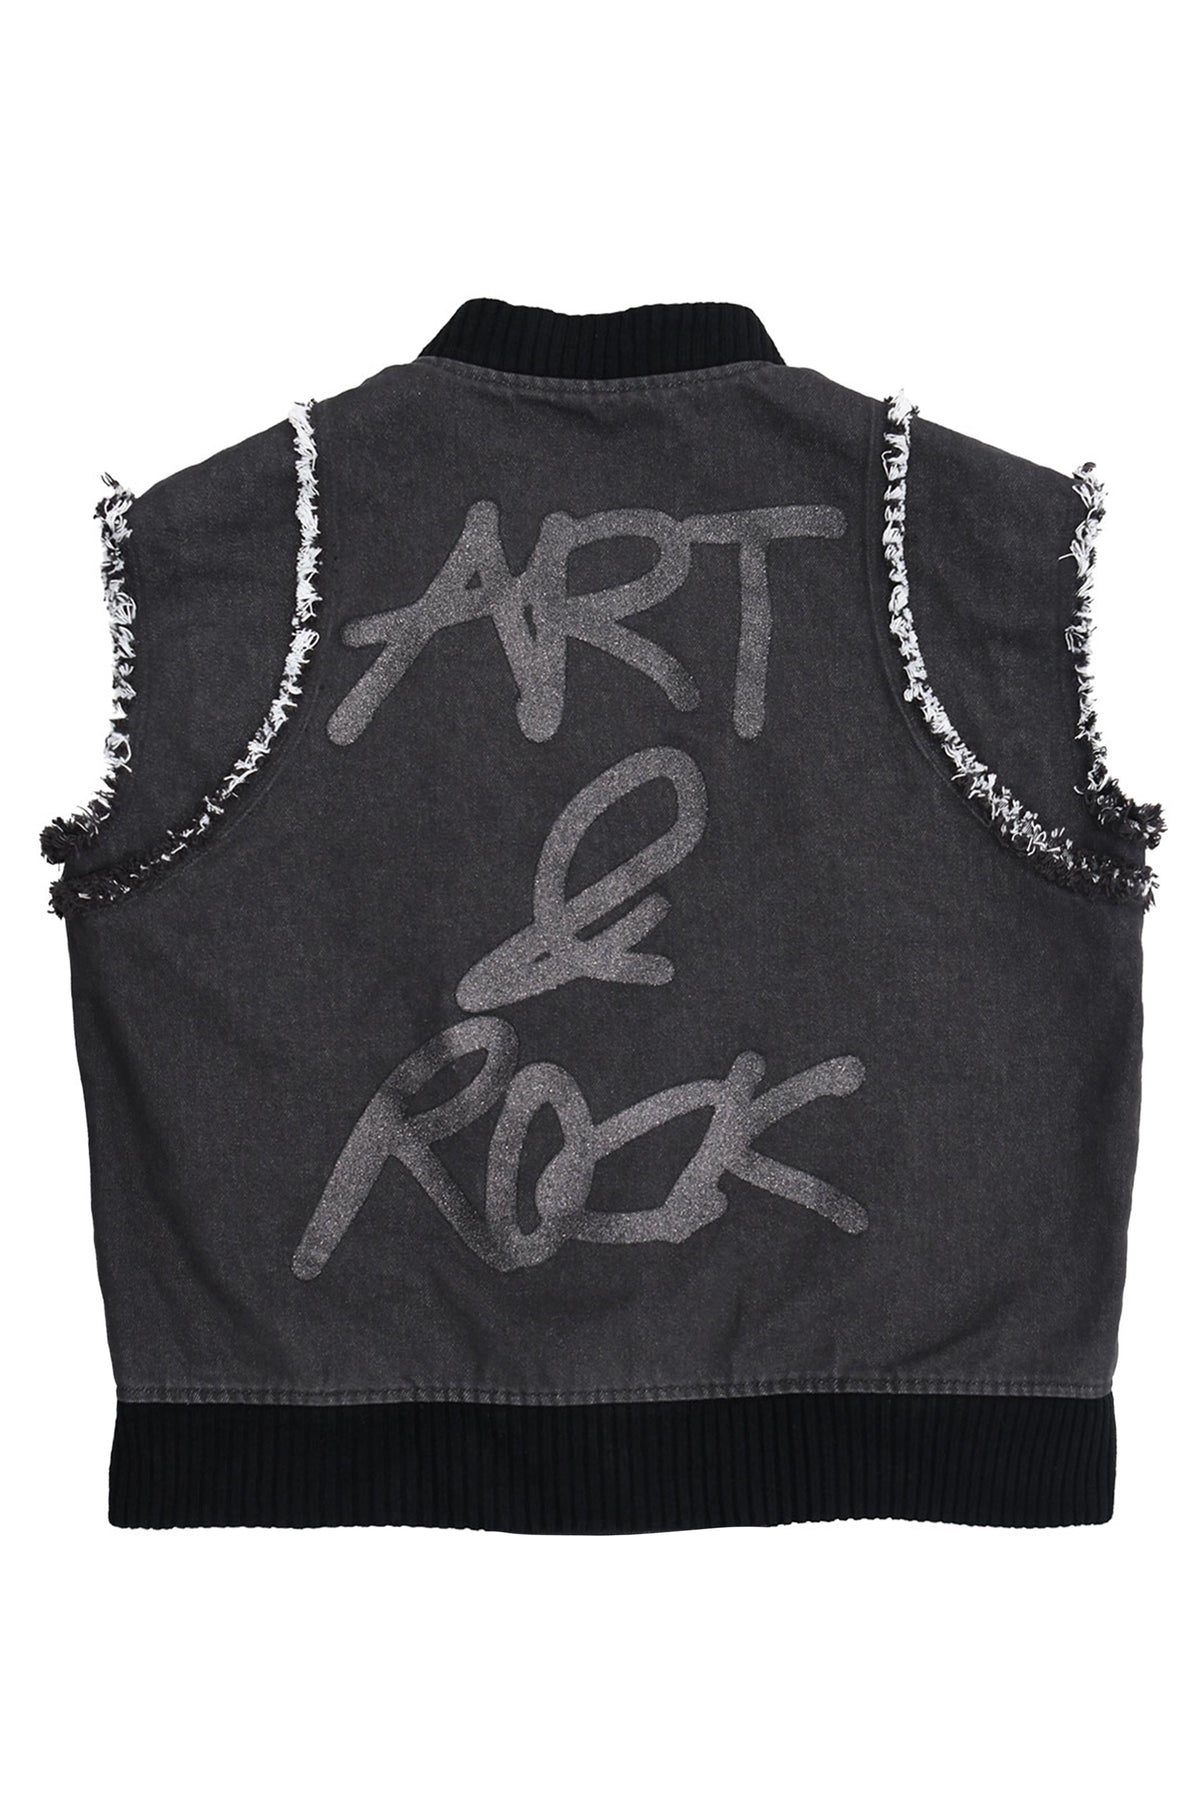 ART & ROCK MA-1 DAMGED DENIM VEST / BLK